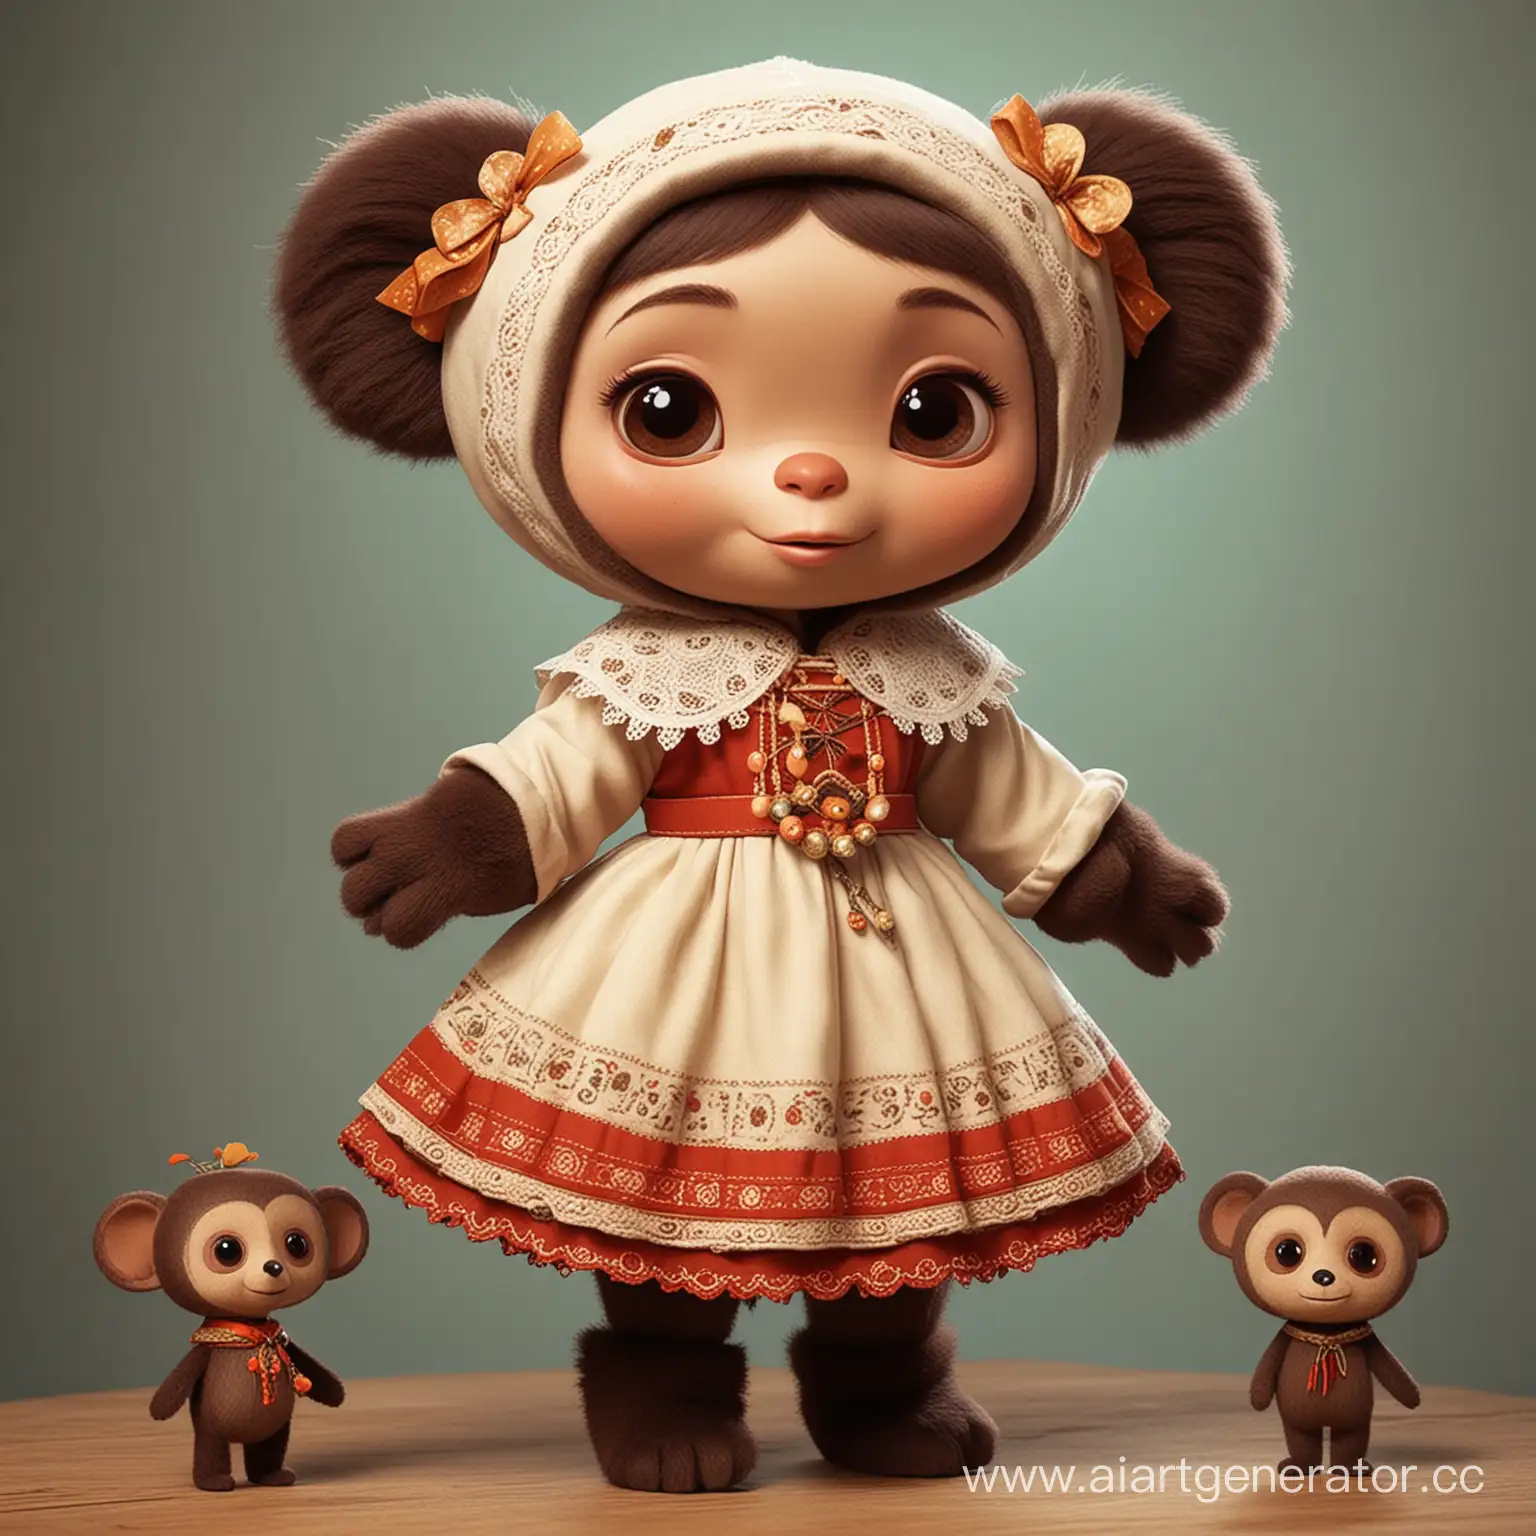 Cheburashka-Cartoon-Character-with-Russian-Folk-Costume-Girl